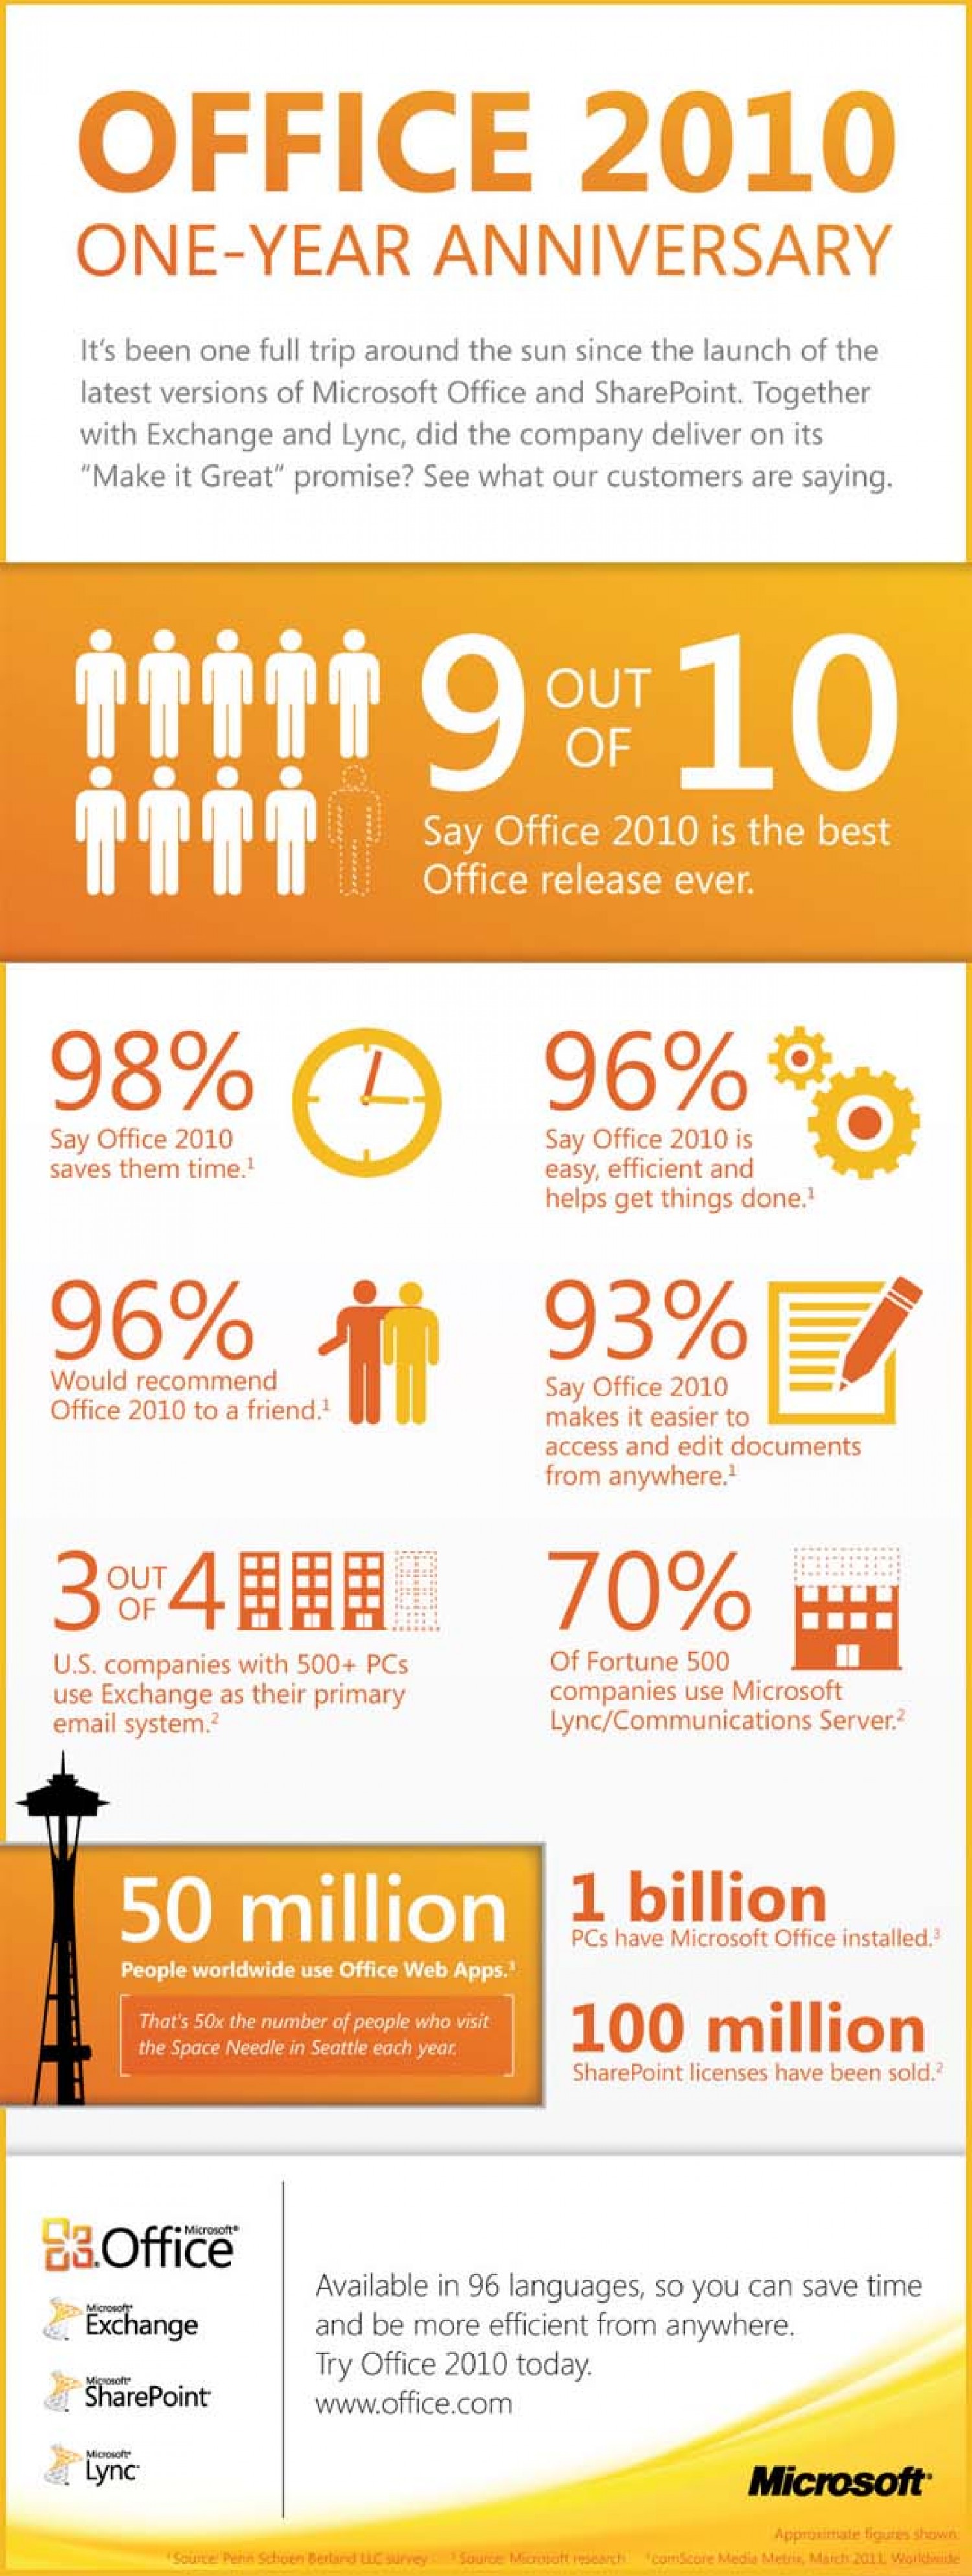 Office 2010 one year anniversary